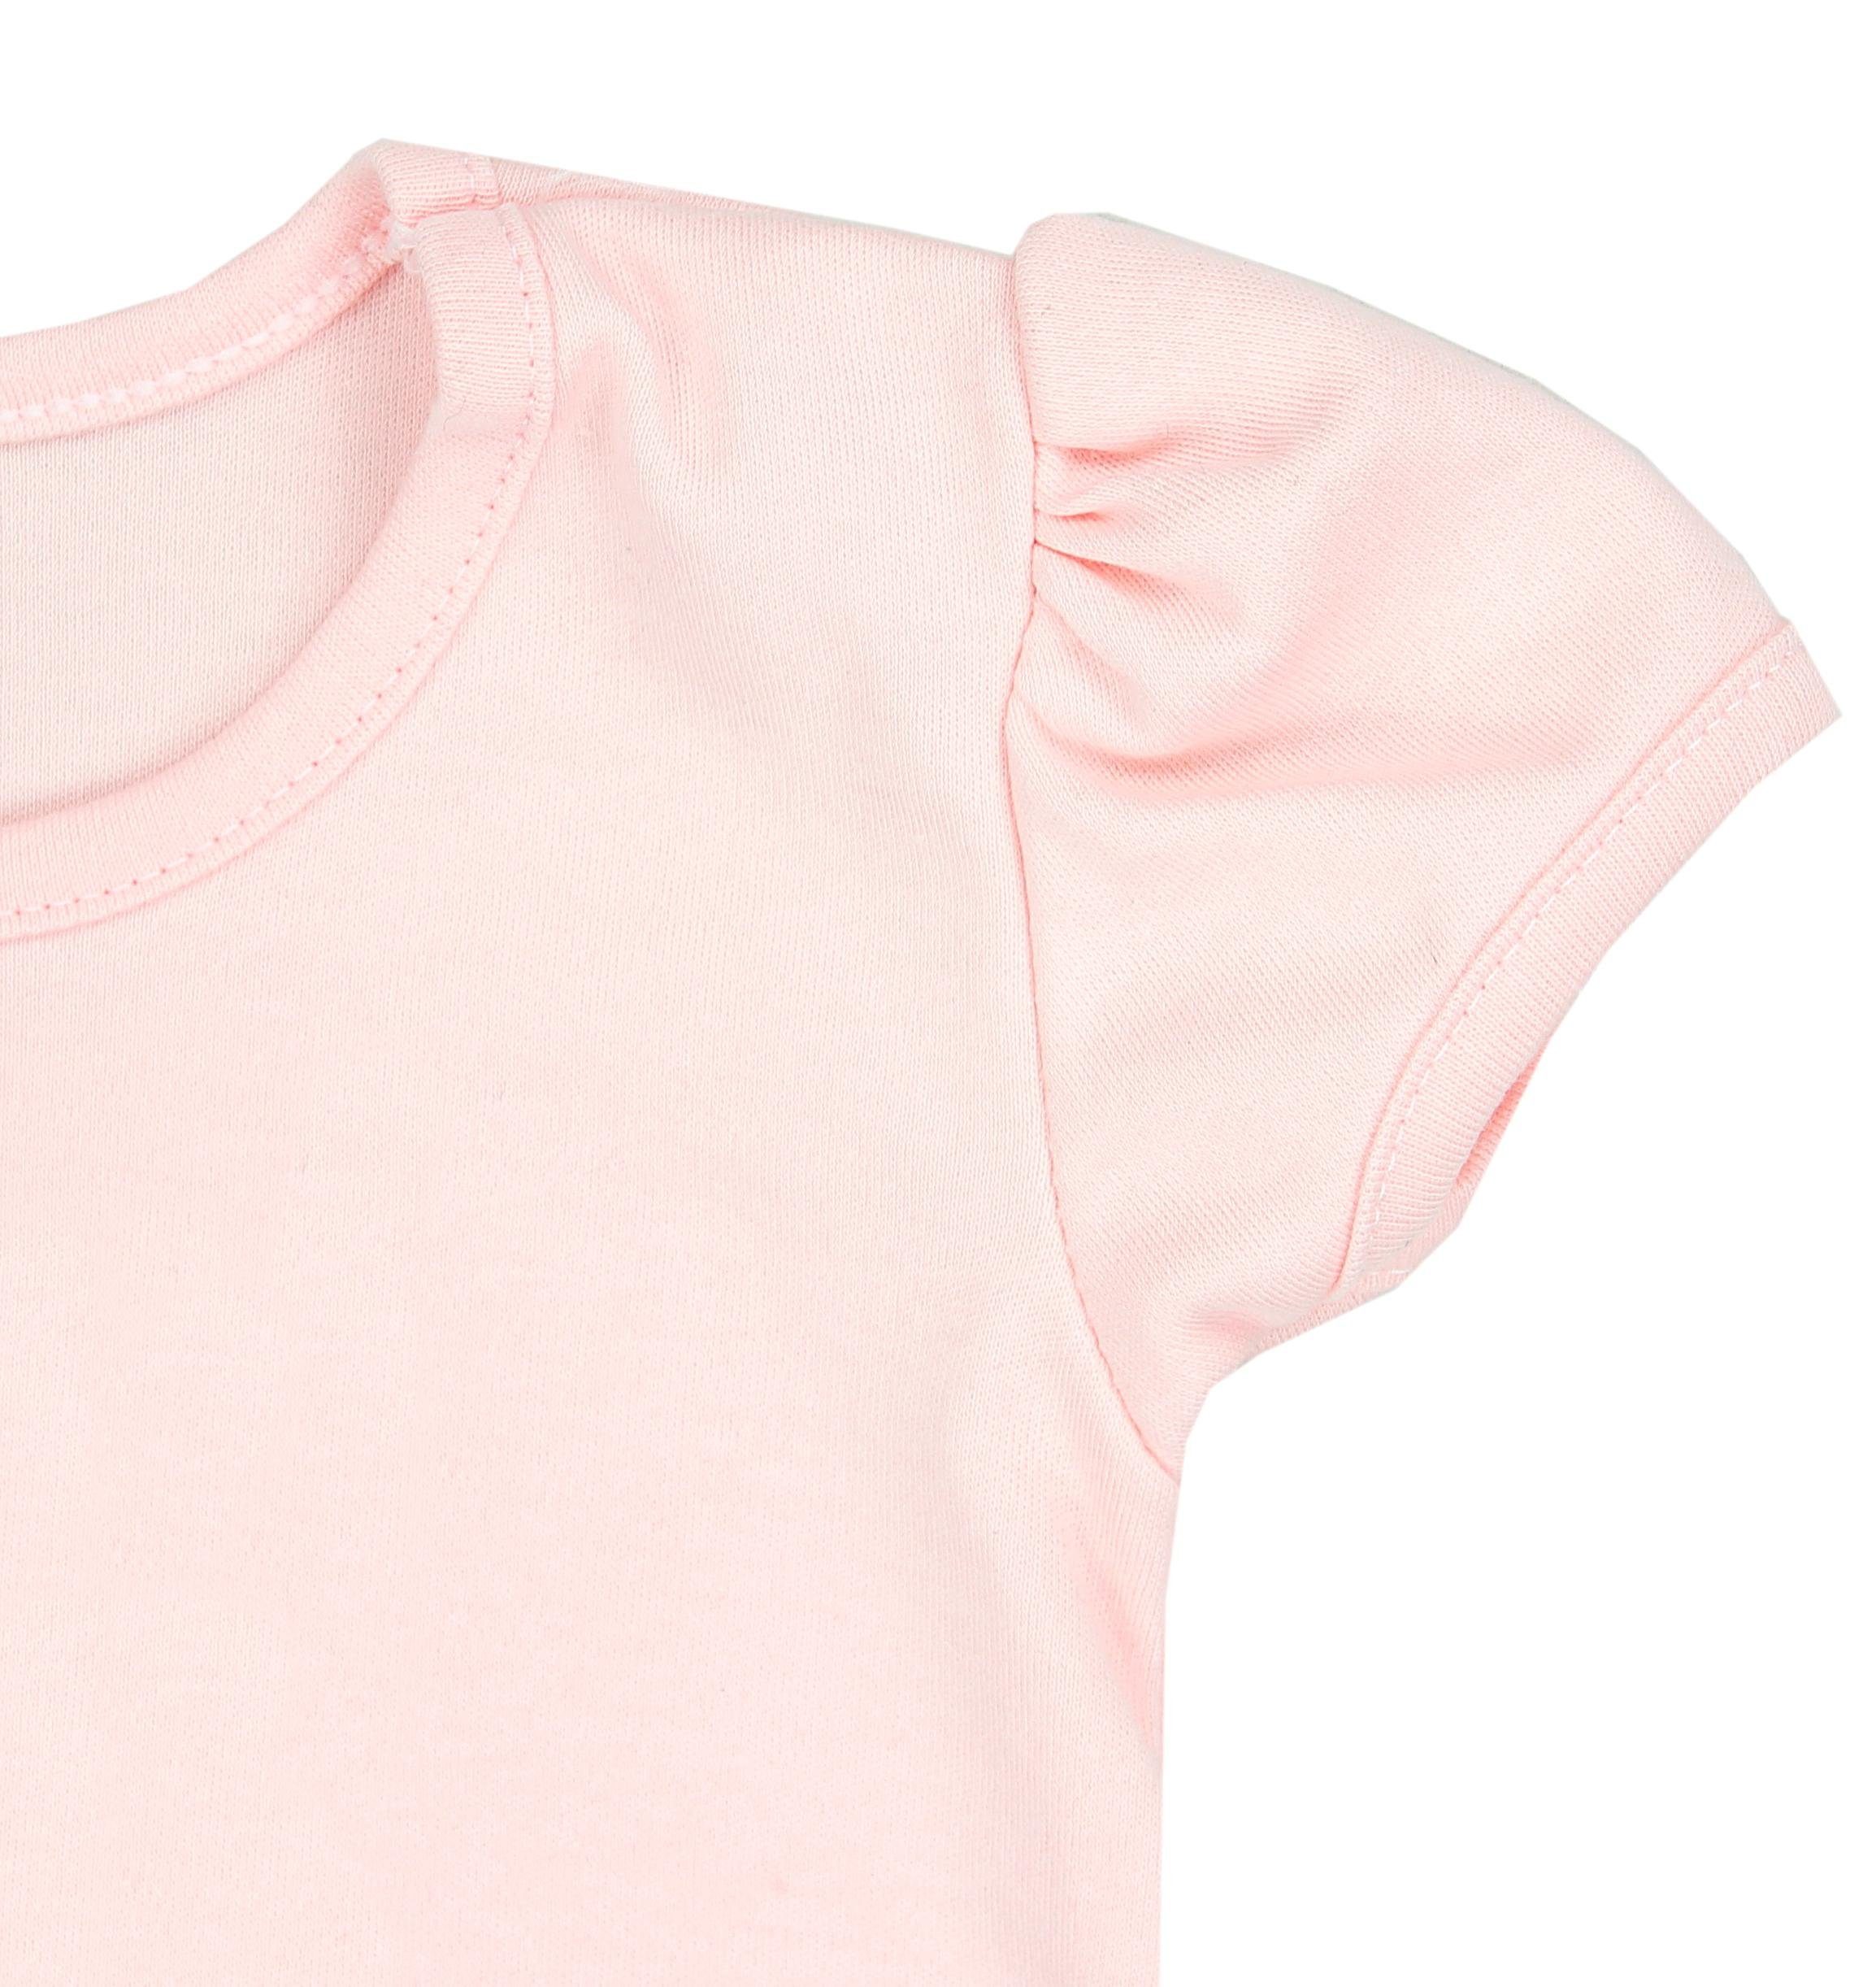 & Grau Sommer Baby TupTam Hose T-Shirt Aprikose Katze Mädchen Bekleidung Shirt TupTam / Shorts Set